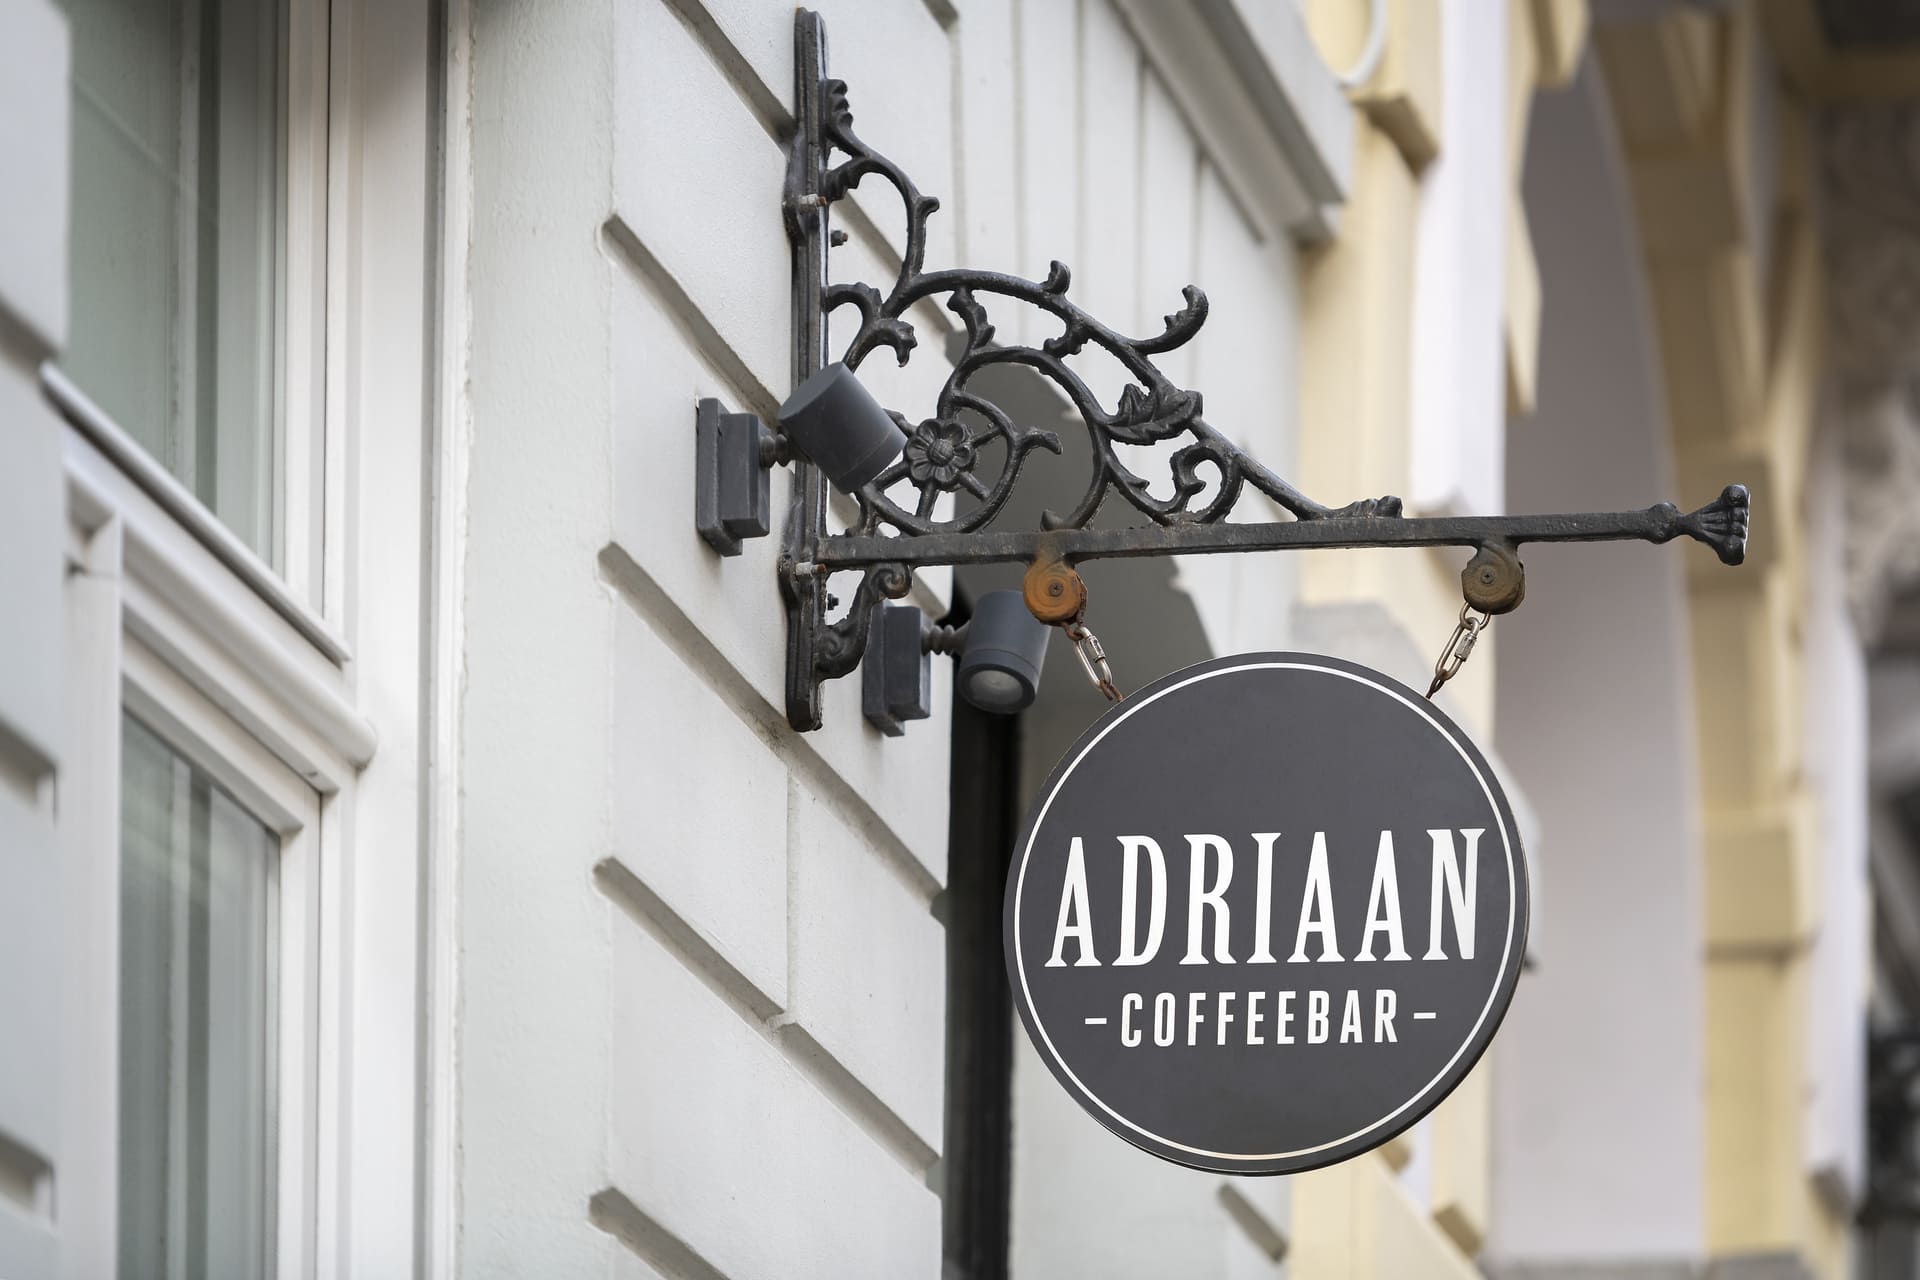 Coffeebar Adriaan Logo Signage on Historic Bruges Building